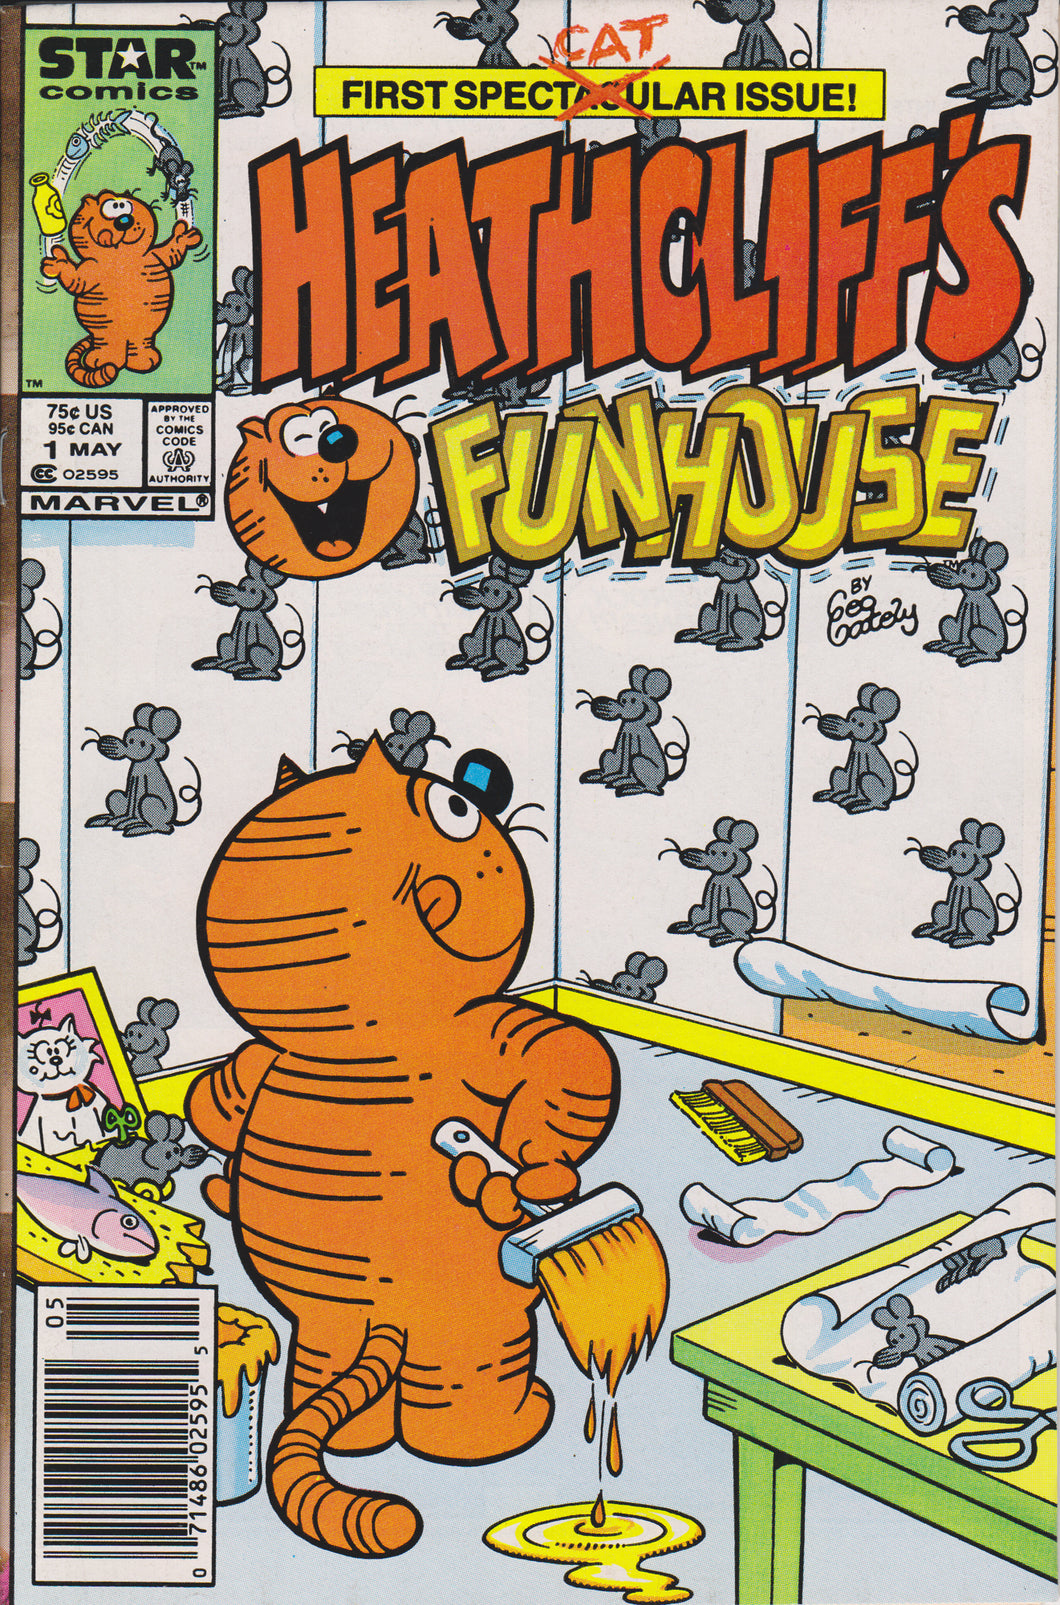 HEATHCLIFF'S FUNHOUSE #1 COMIC BOOK ~ Marvel / Star Comics